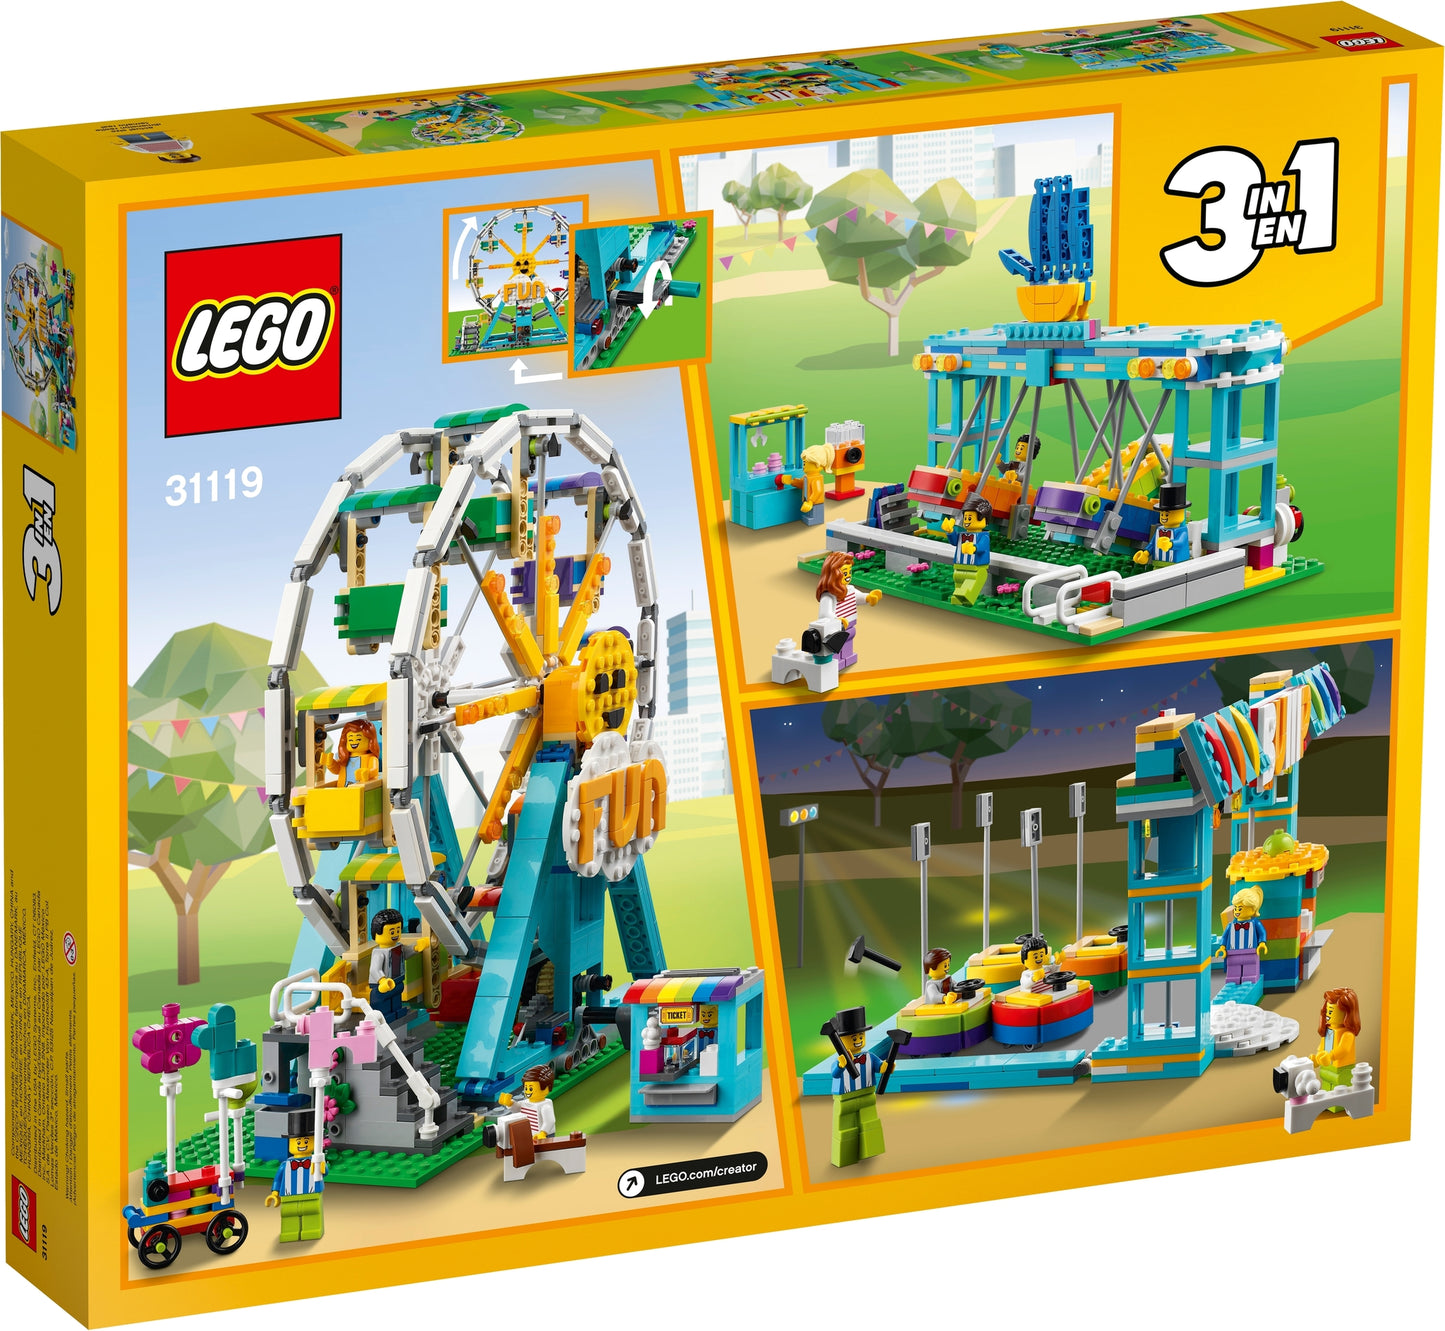 31119 LEGO Creator - Ruota Panoramica